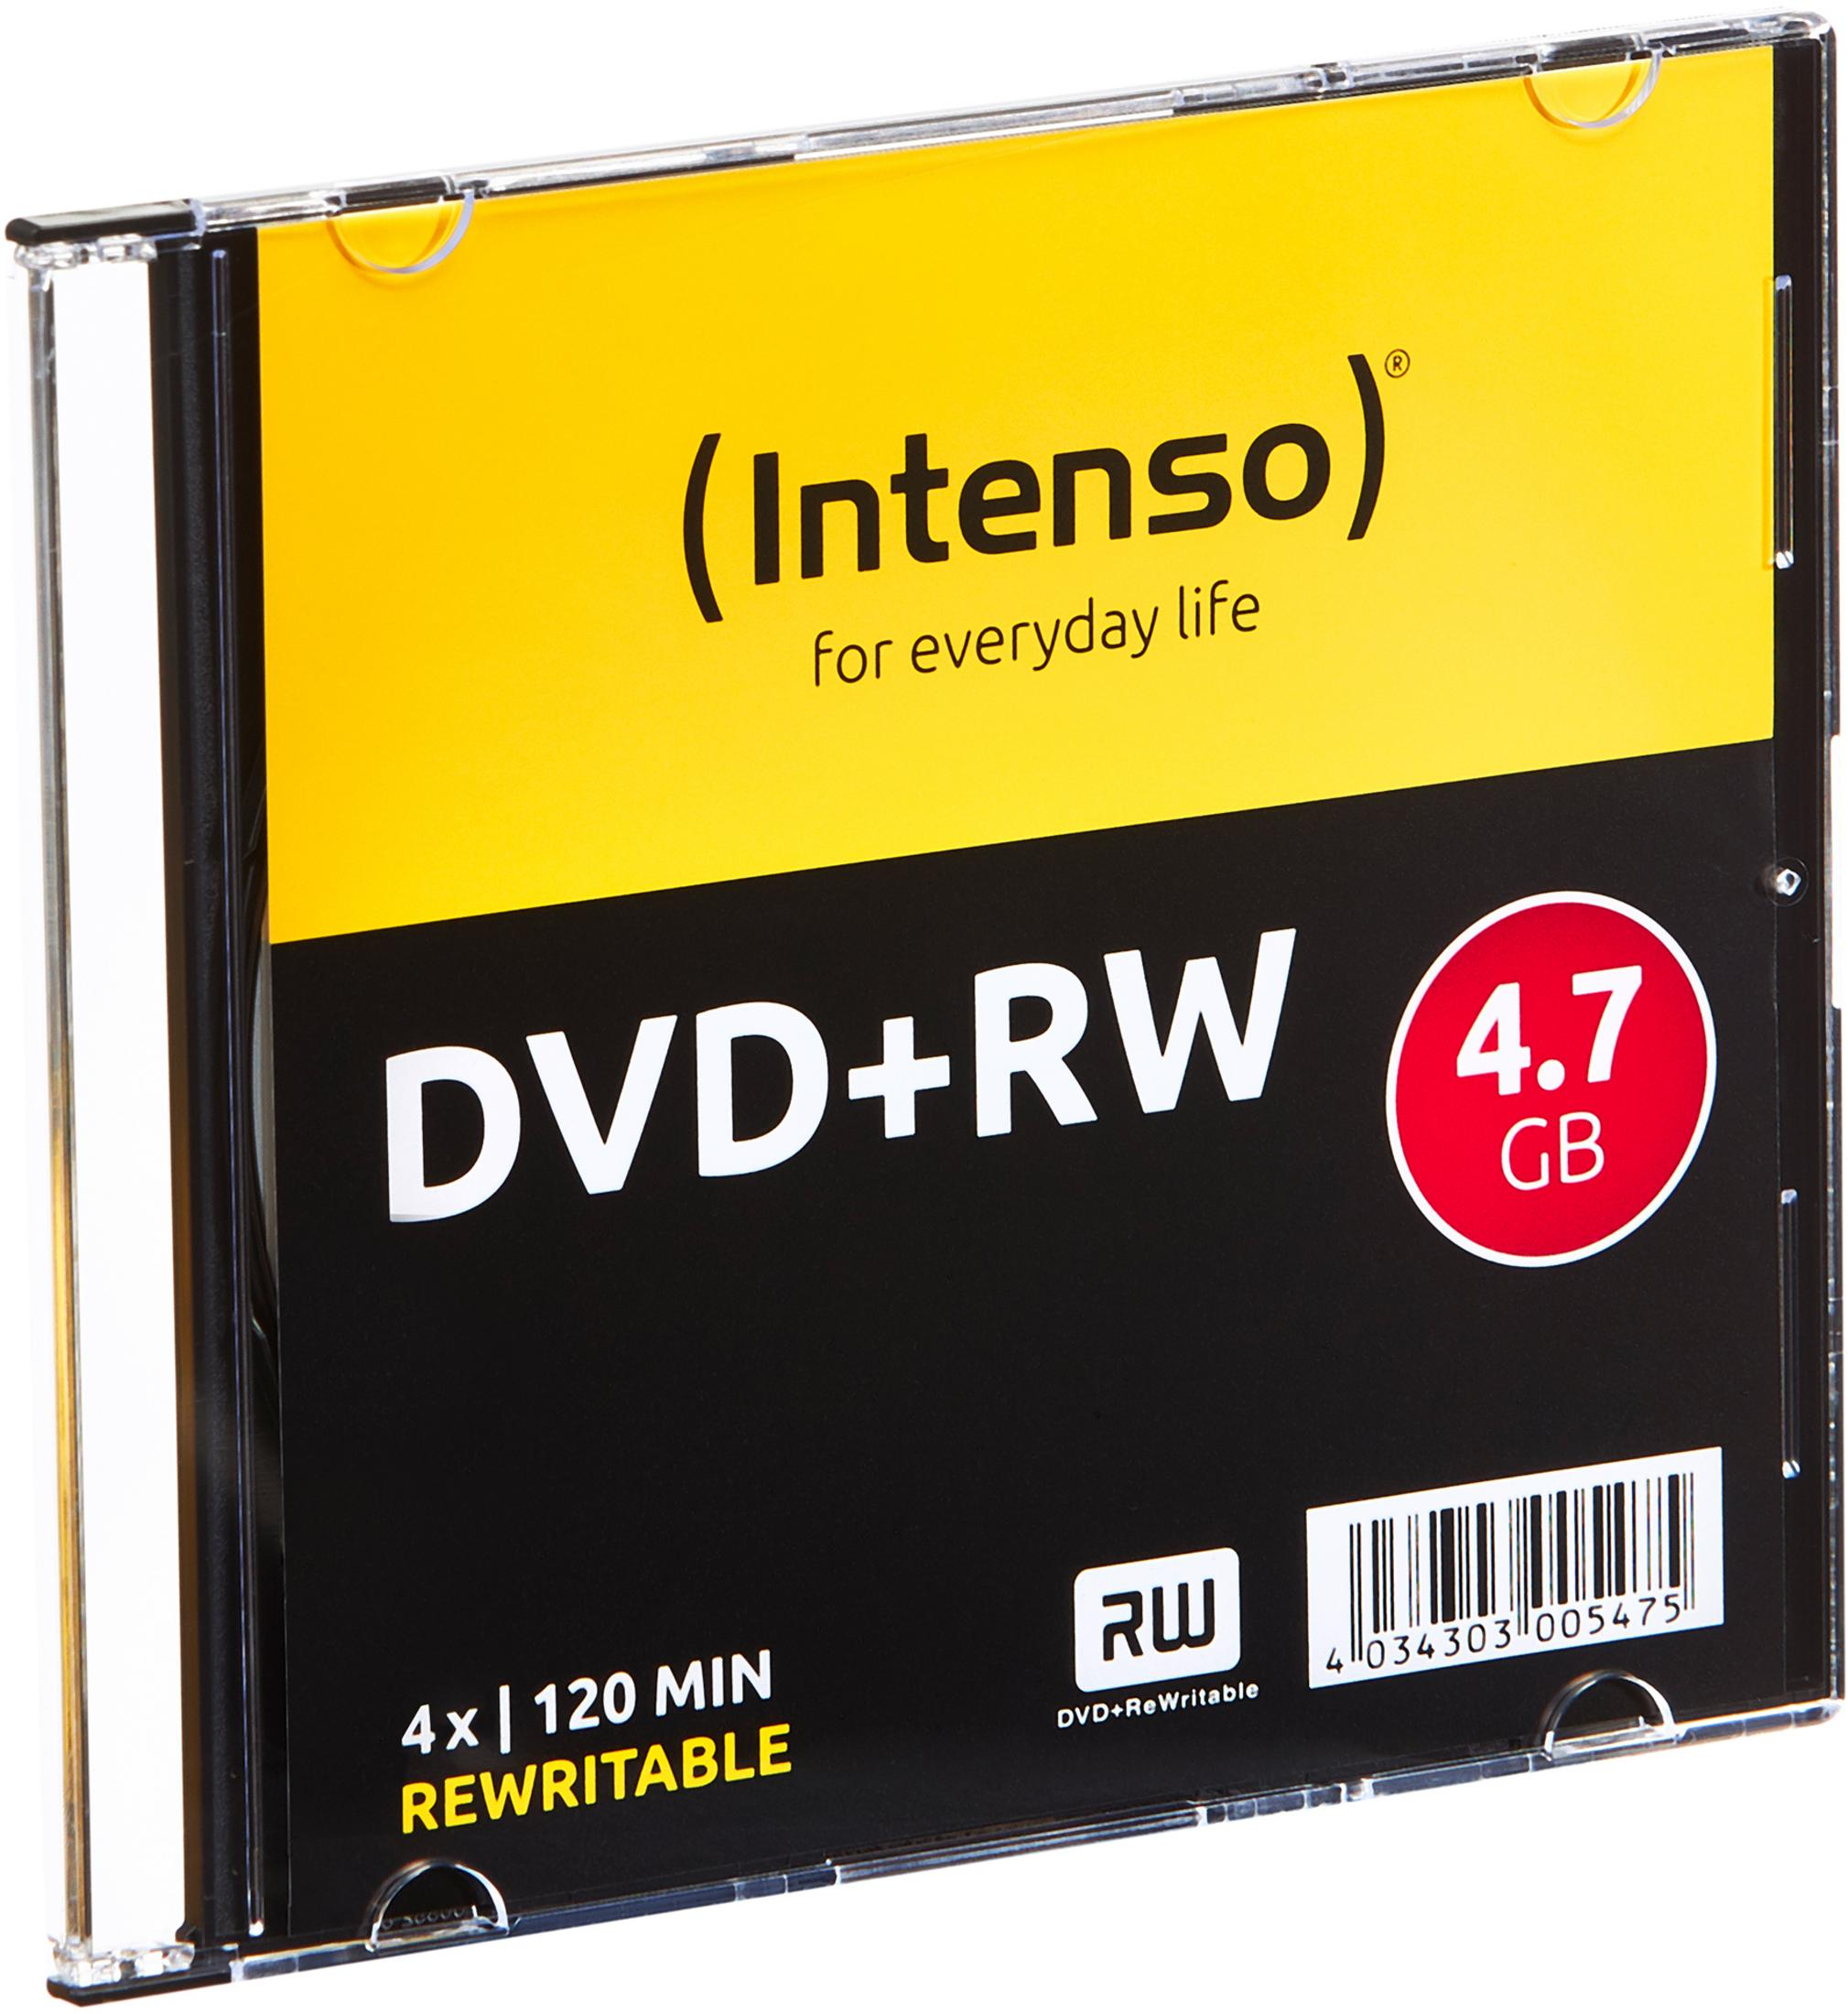 INTENSO 4211632 DVD+RW 4X SLIM Rohlinge 10ER DVD+RW